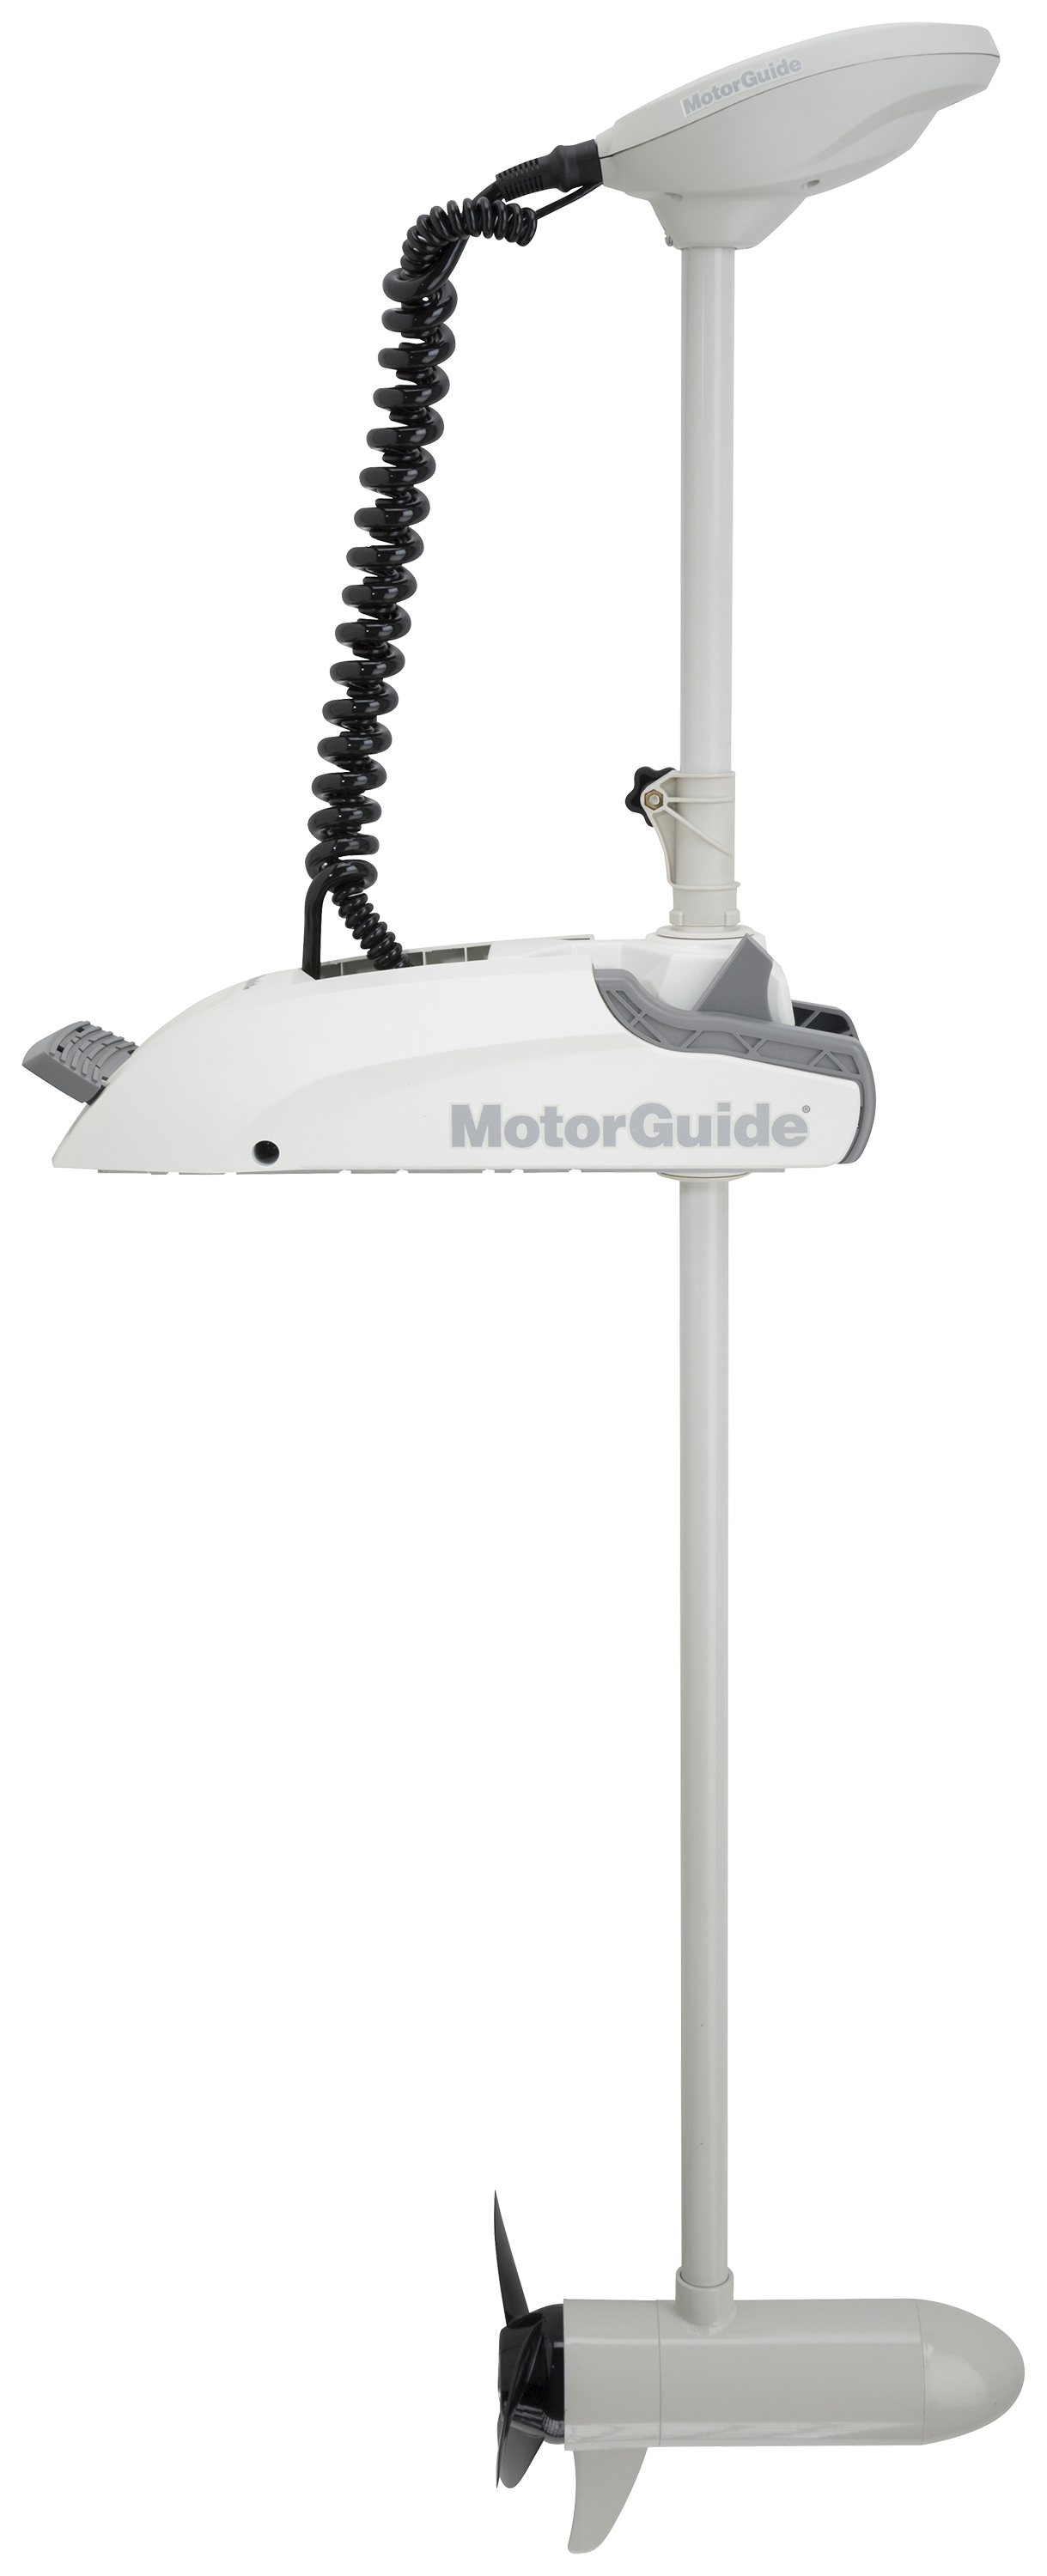 MotorGuide Xi3 Saltwater Wireless Remote Trolling Motor